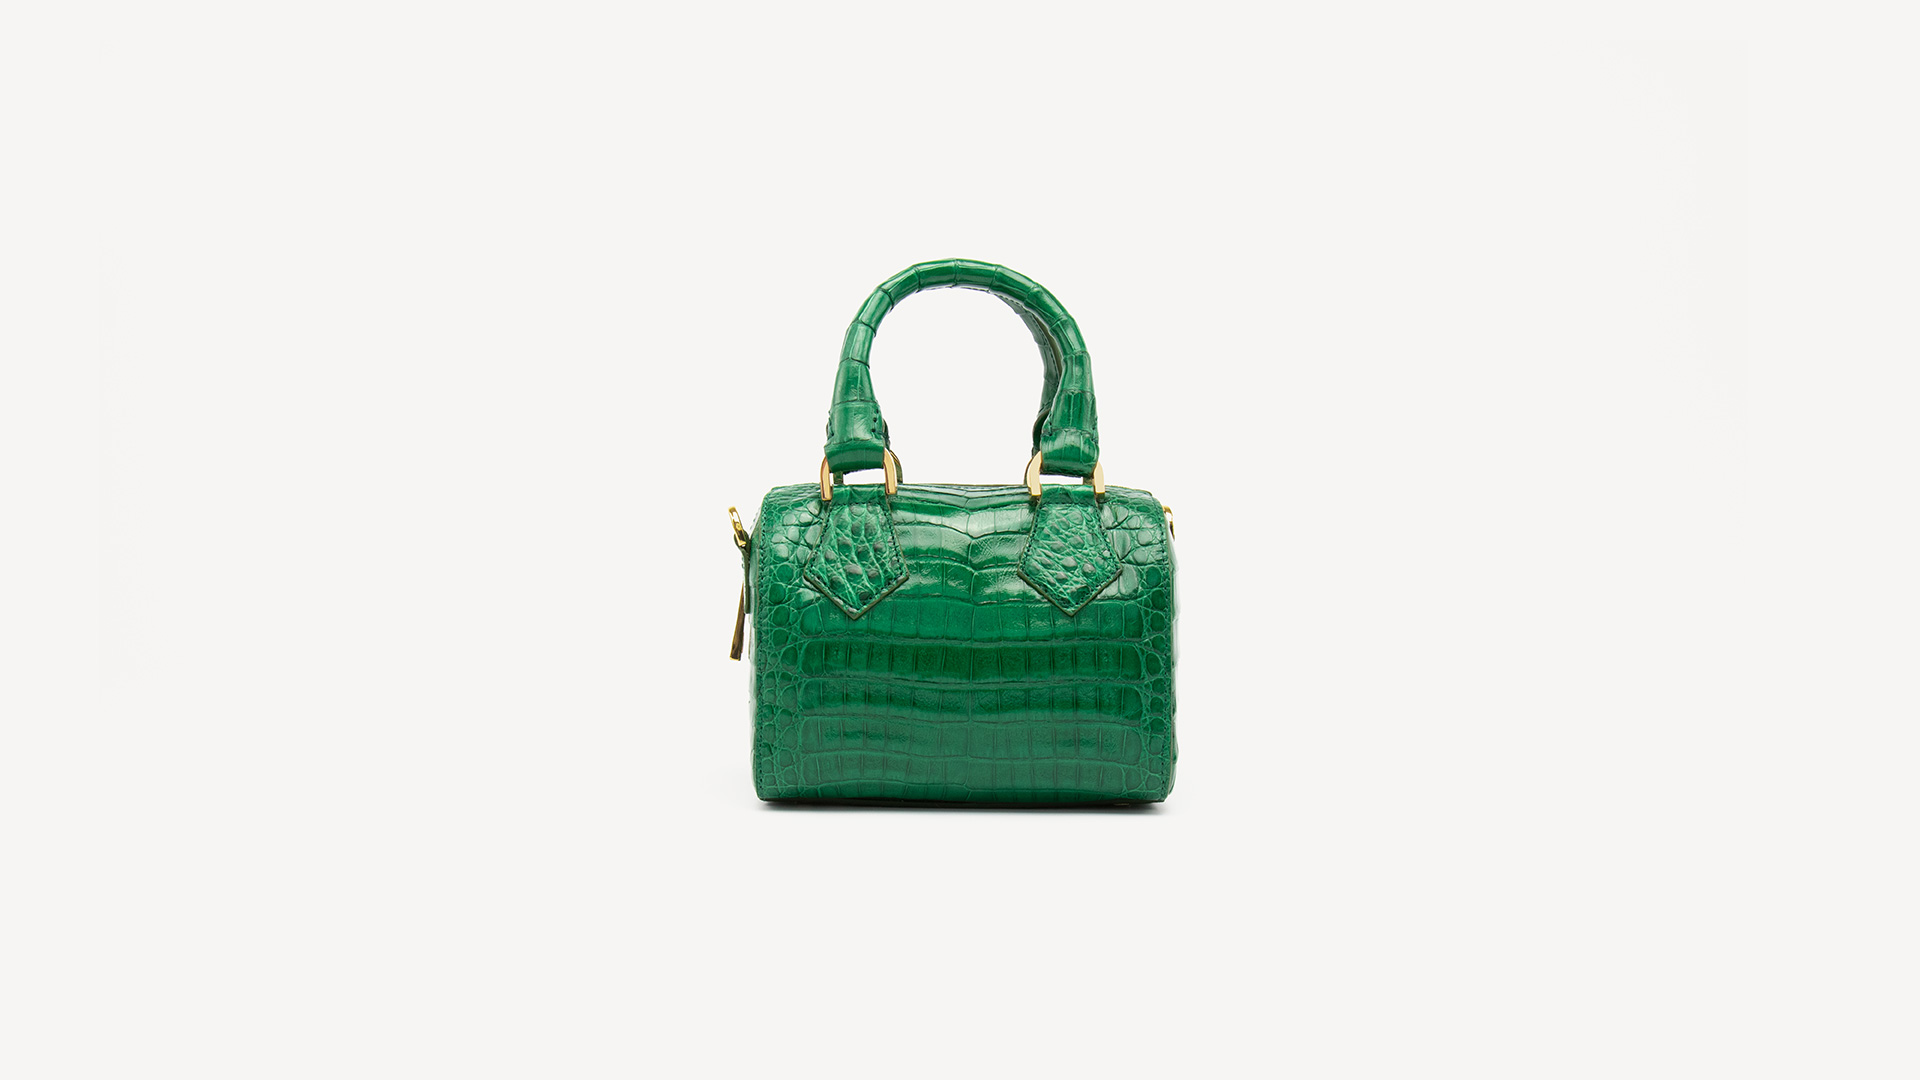 Nanalaeriel Green Women's Handbags